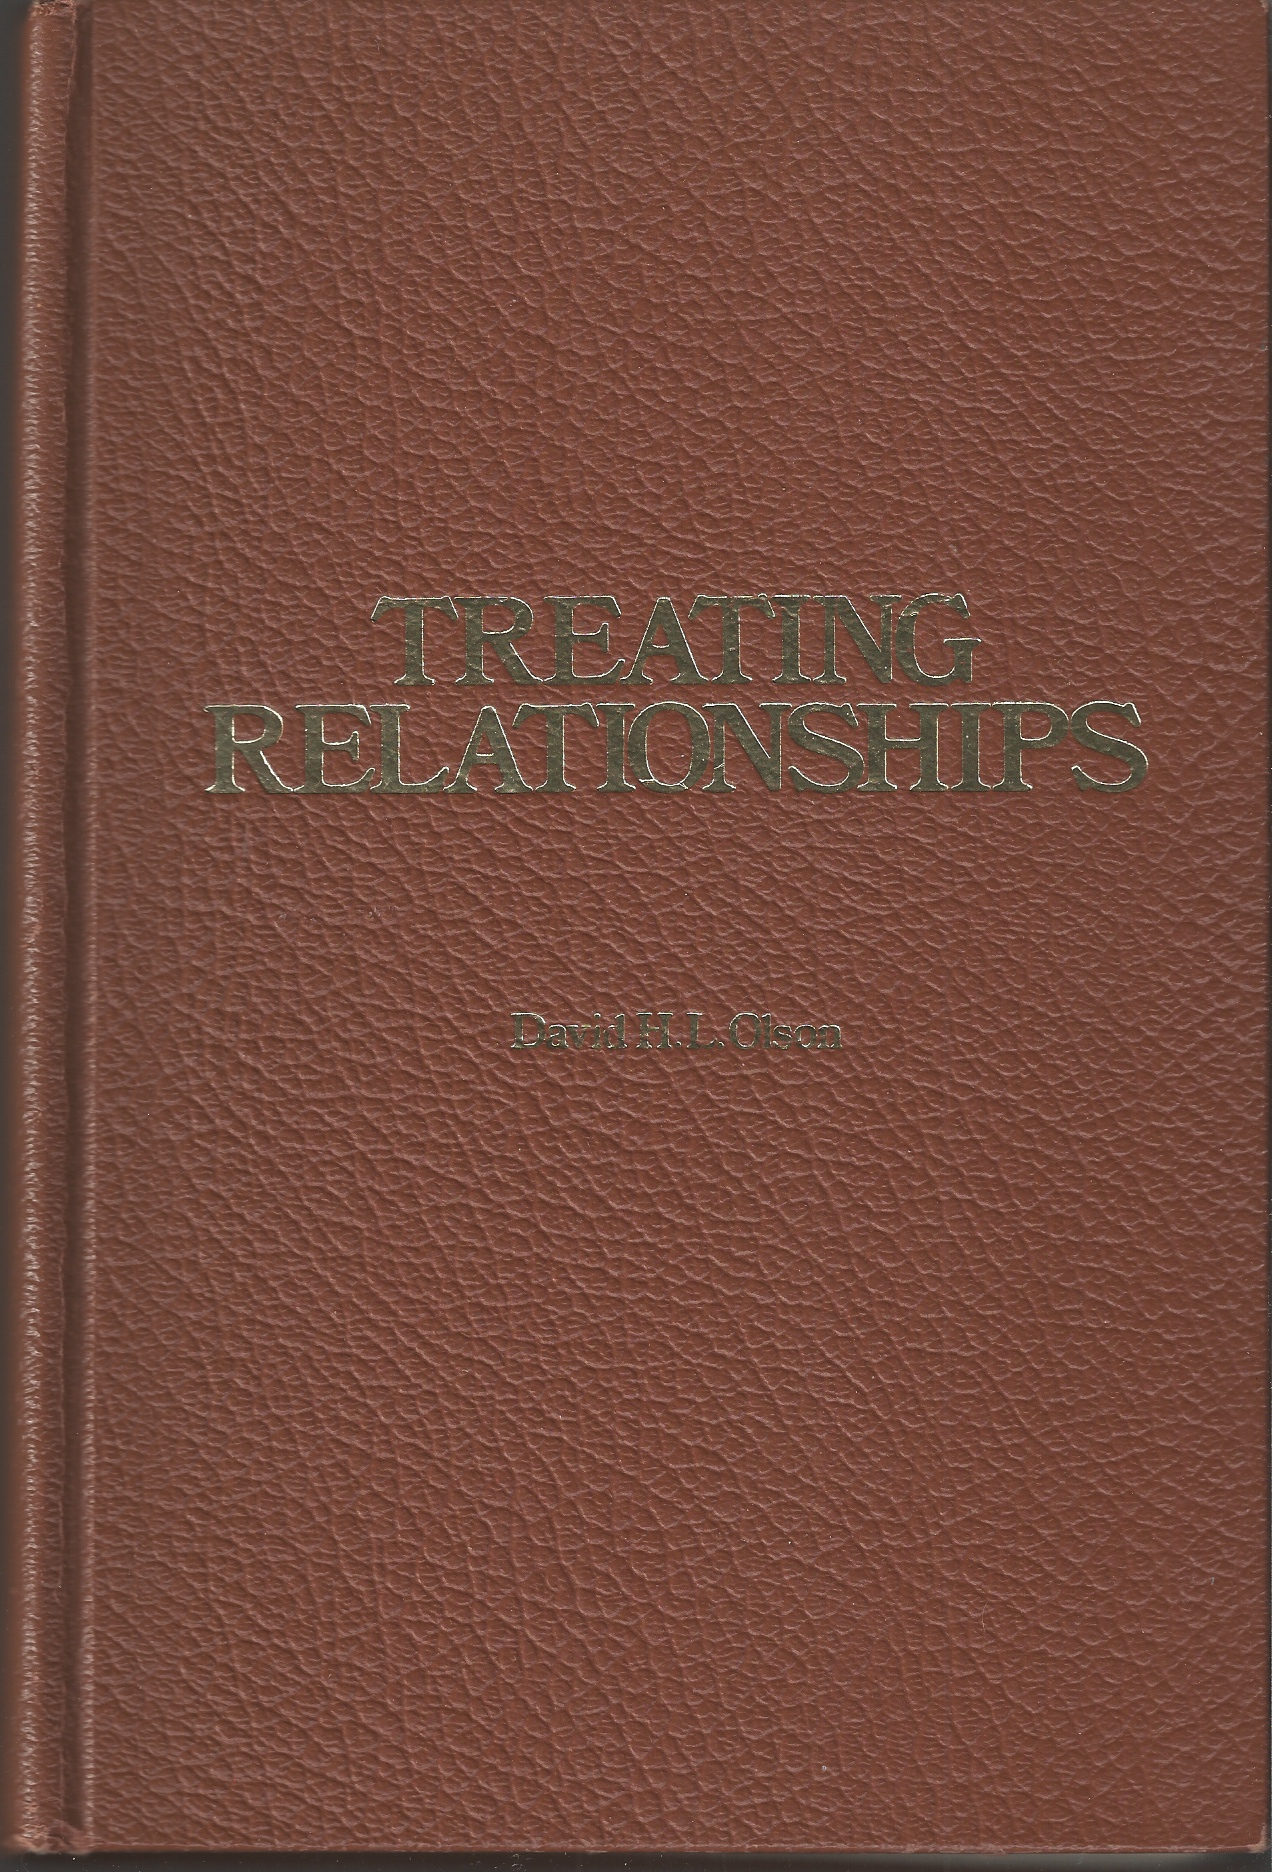 OLSON DAVID H.L. - Treating Relationships